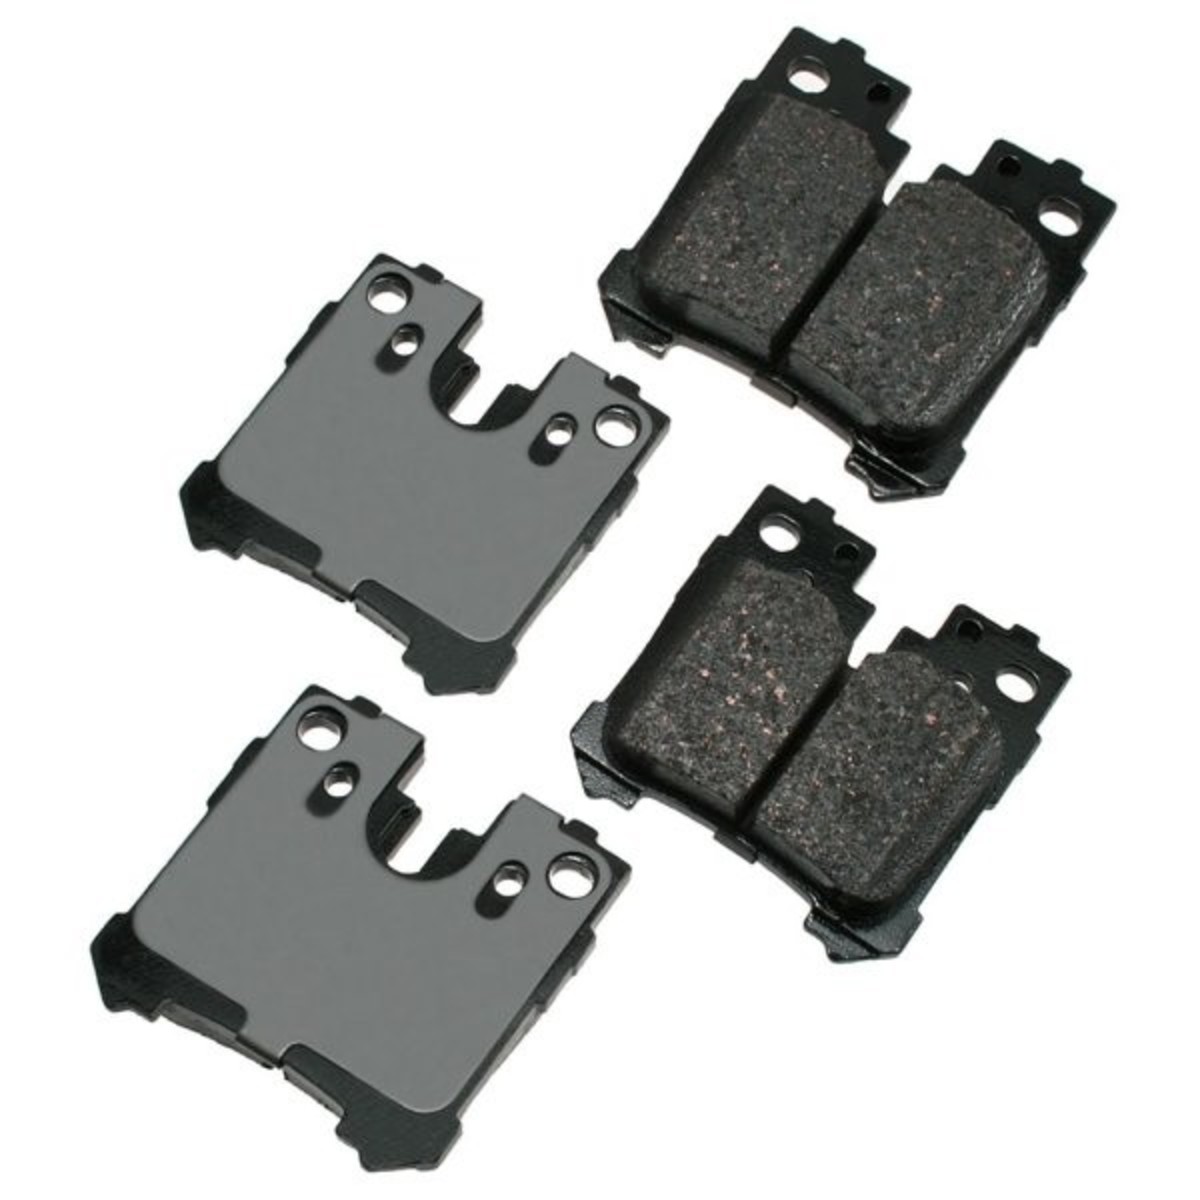 Akebono ProACT ceramic brake pads for the LS 460